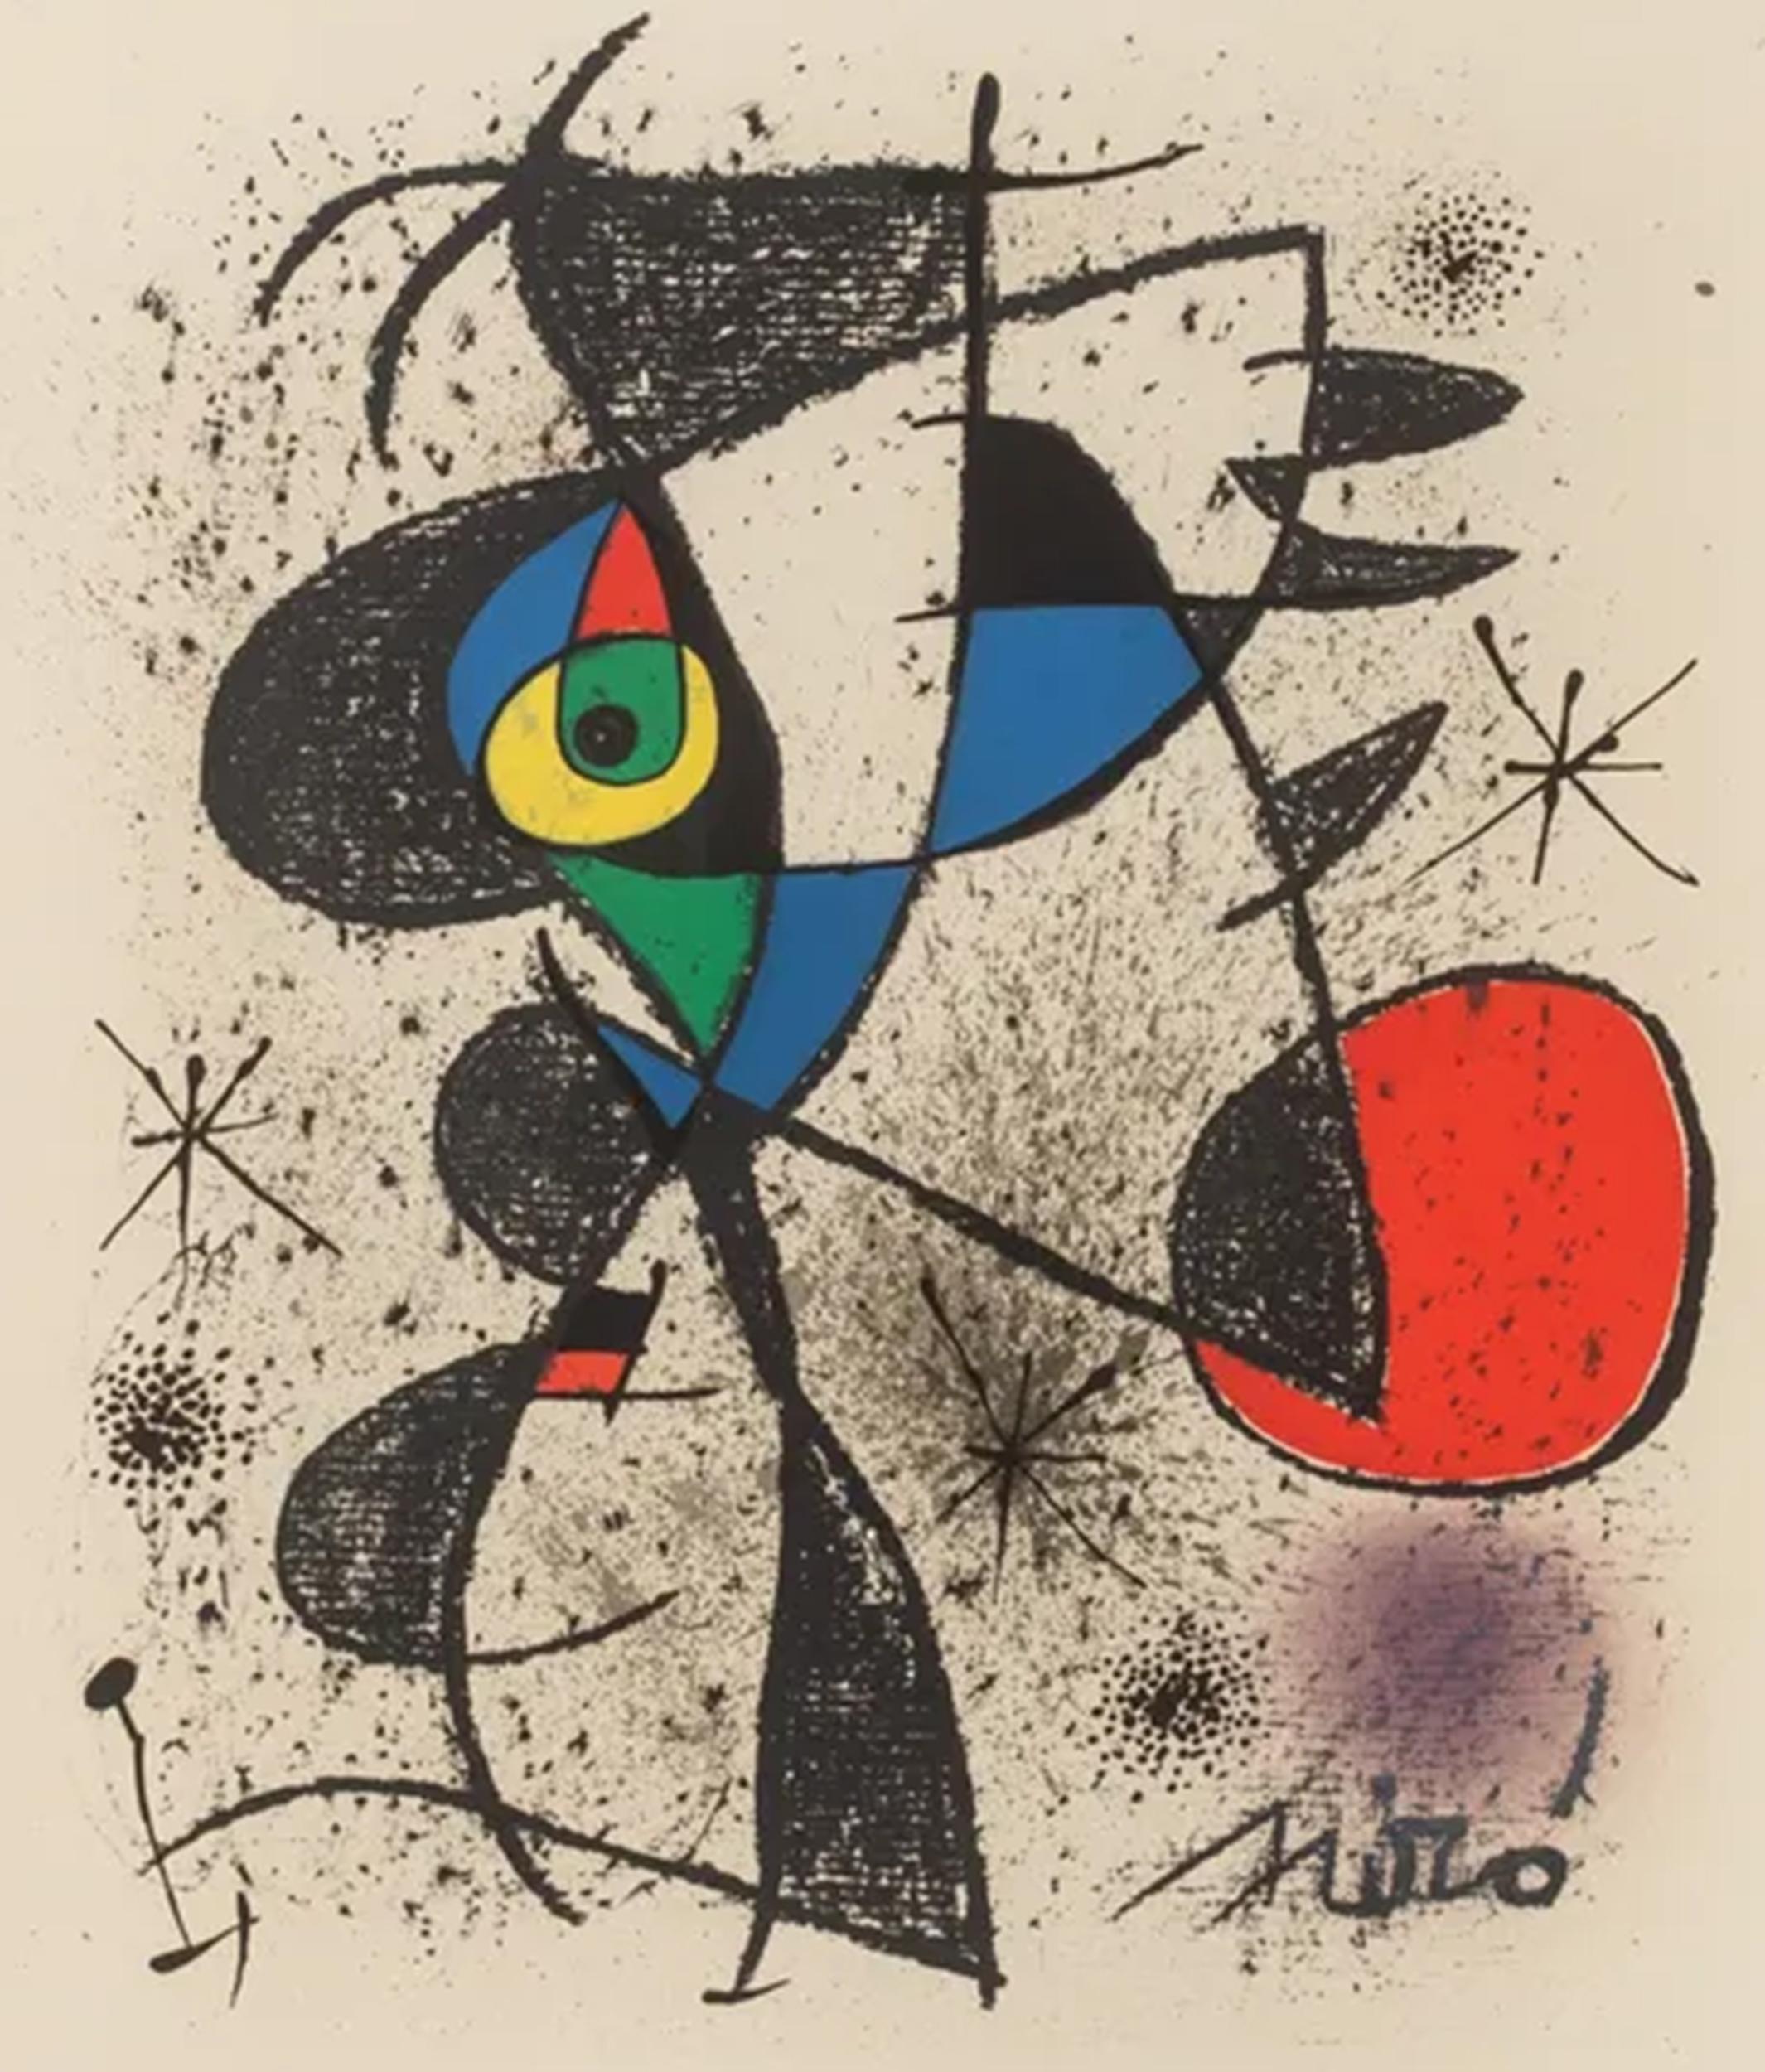 Universite de Geneve - Surrealist Print by Joan Miró